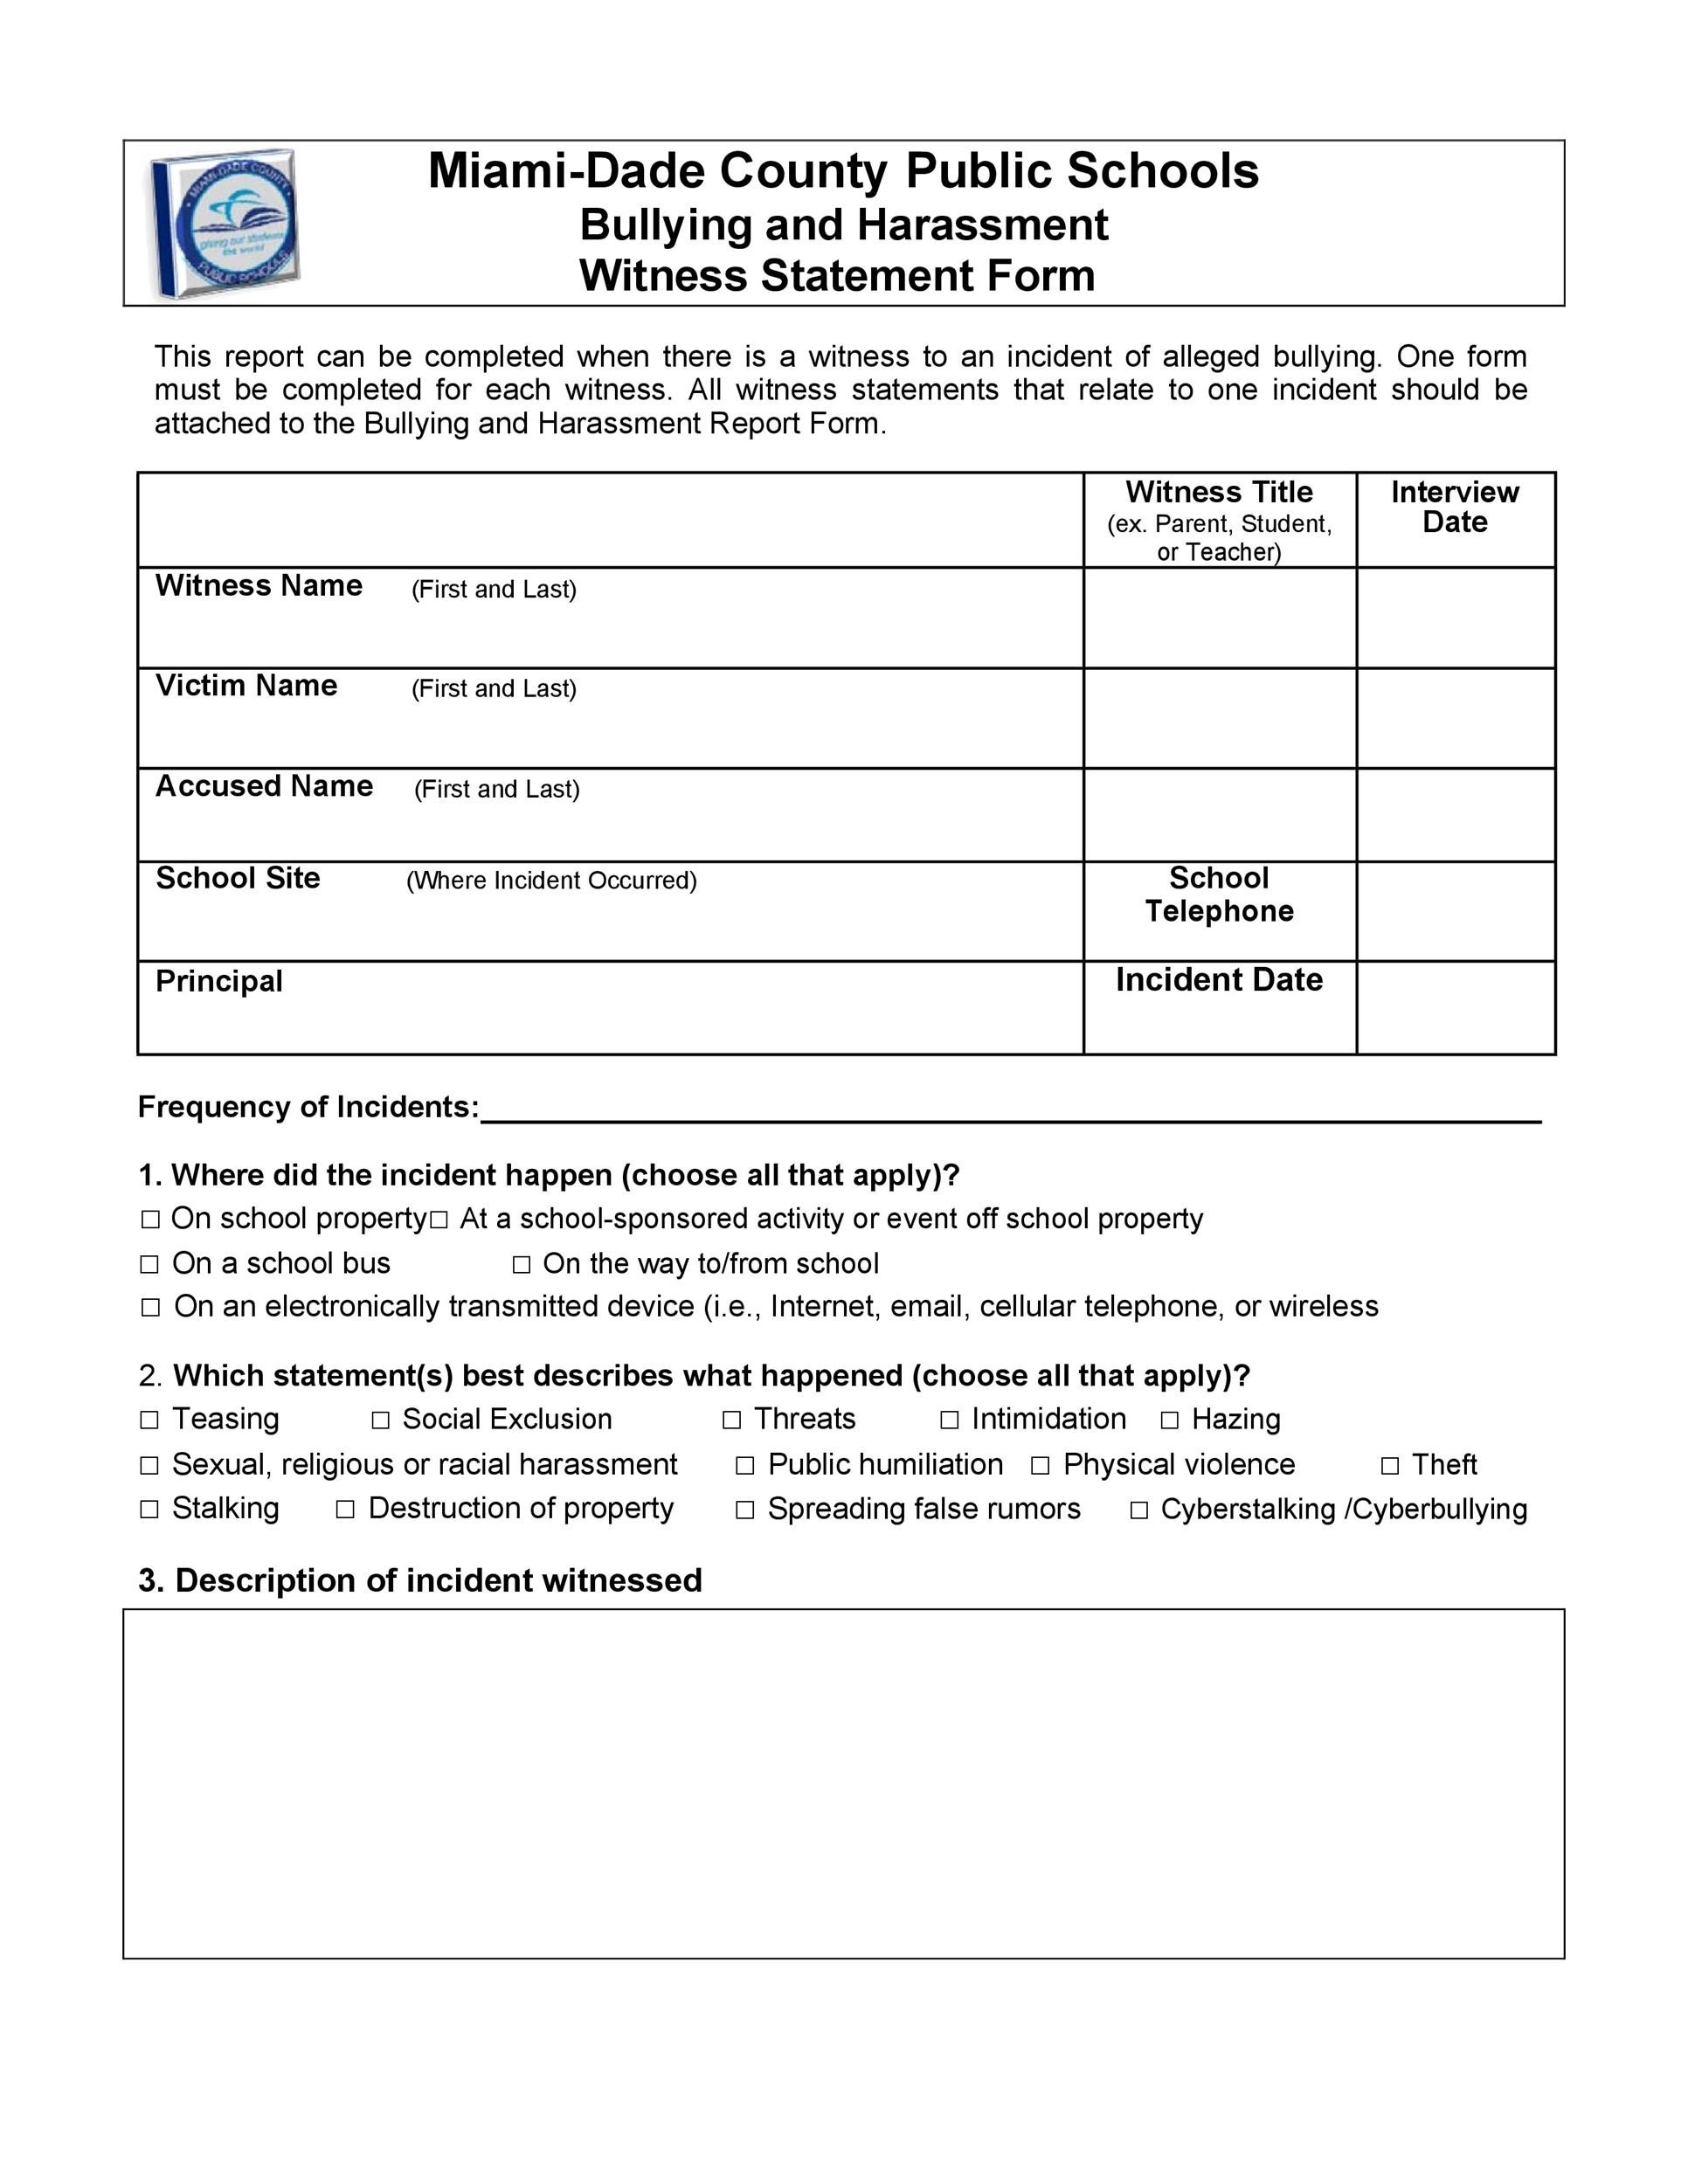 Free witness statement form 09